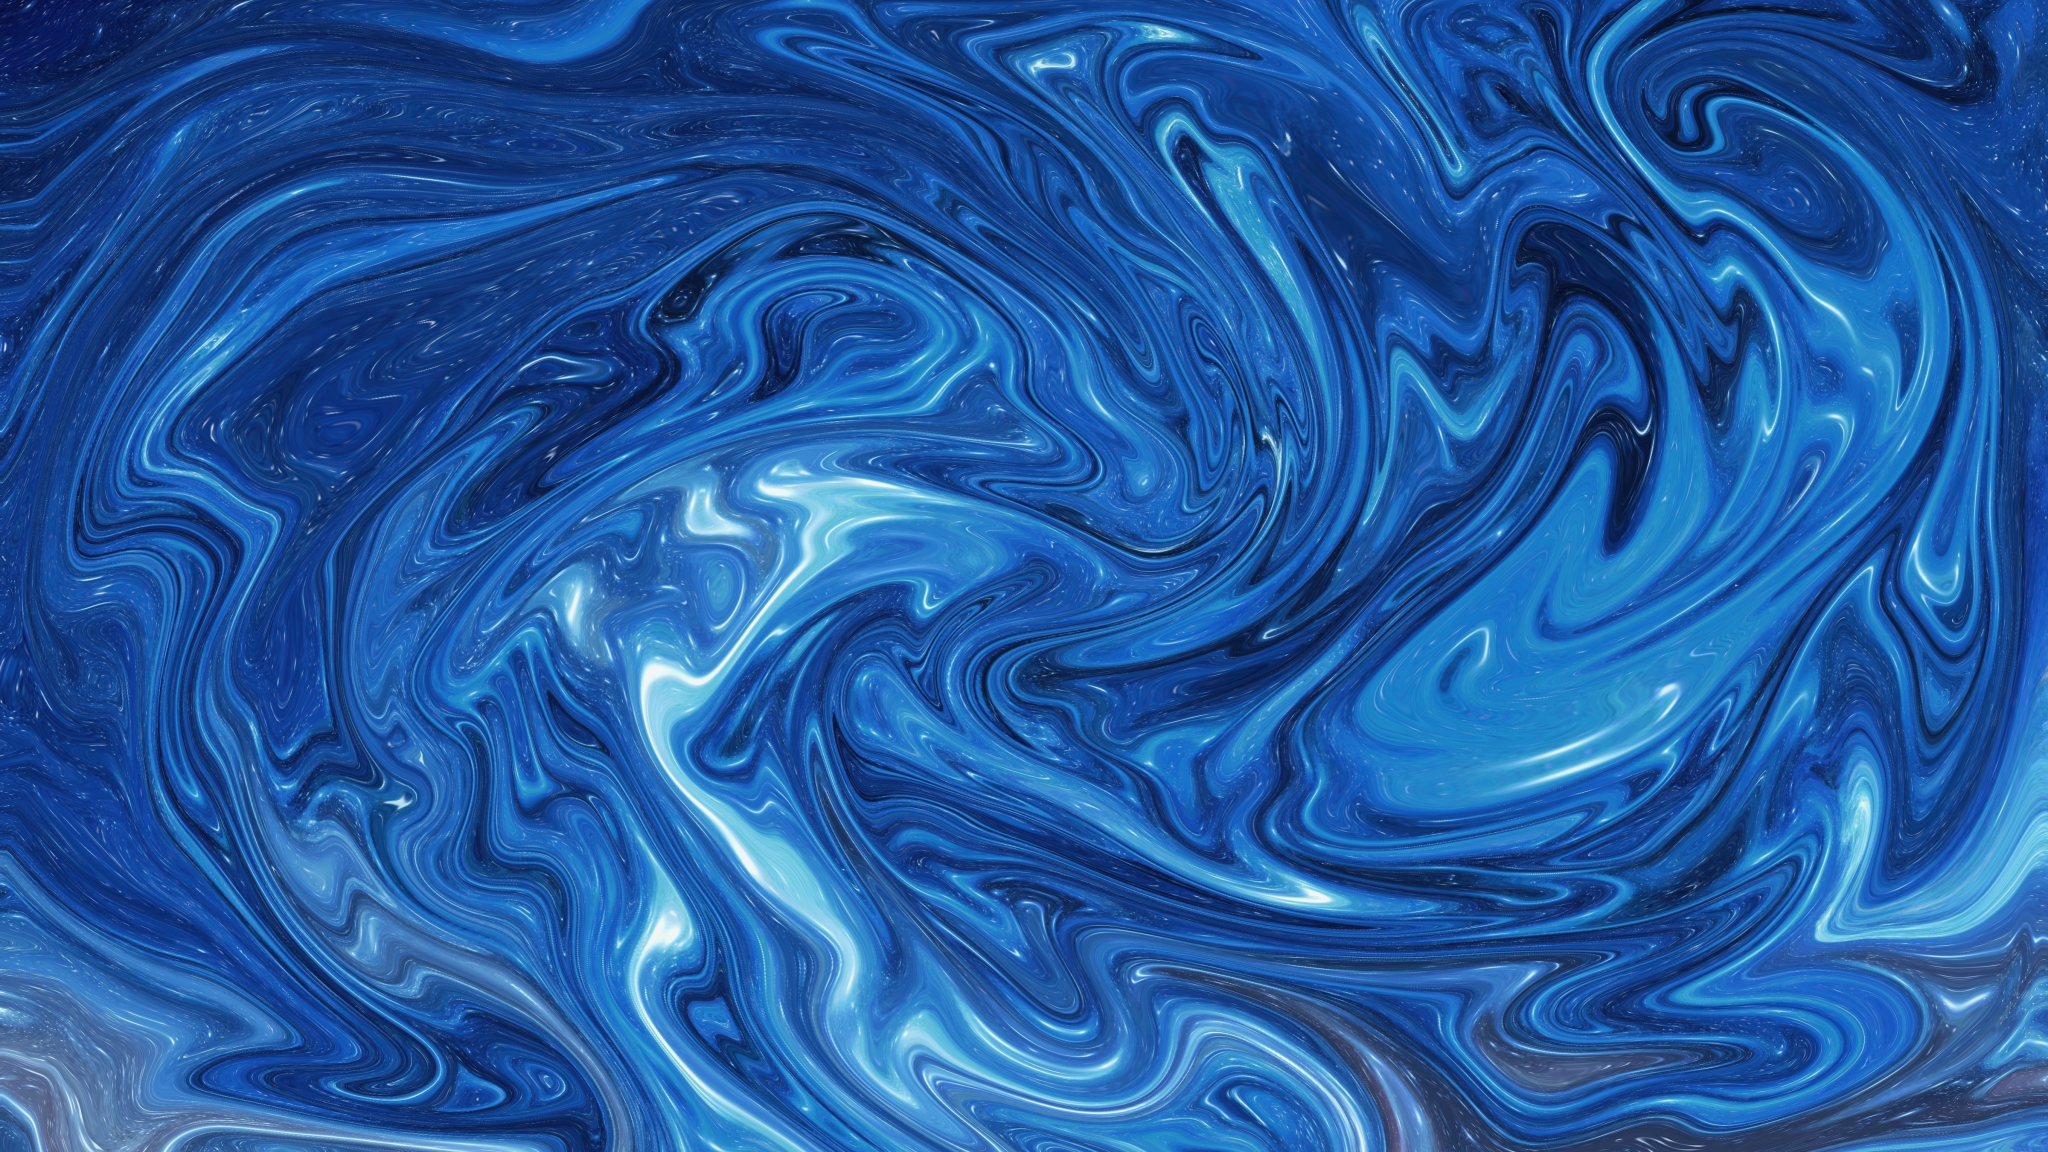 Download wallpaper 2048x1152 abstract, blue liquid mixture, pattern